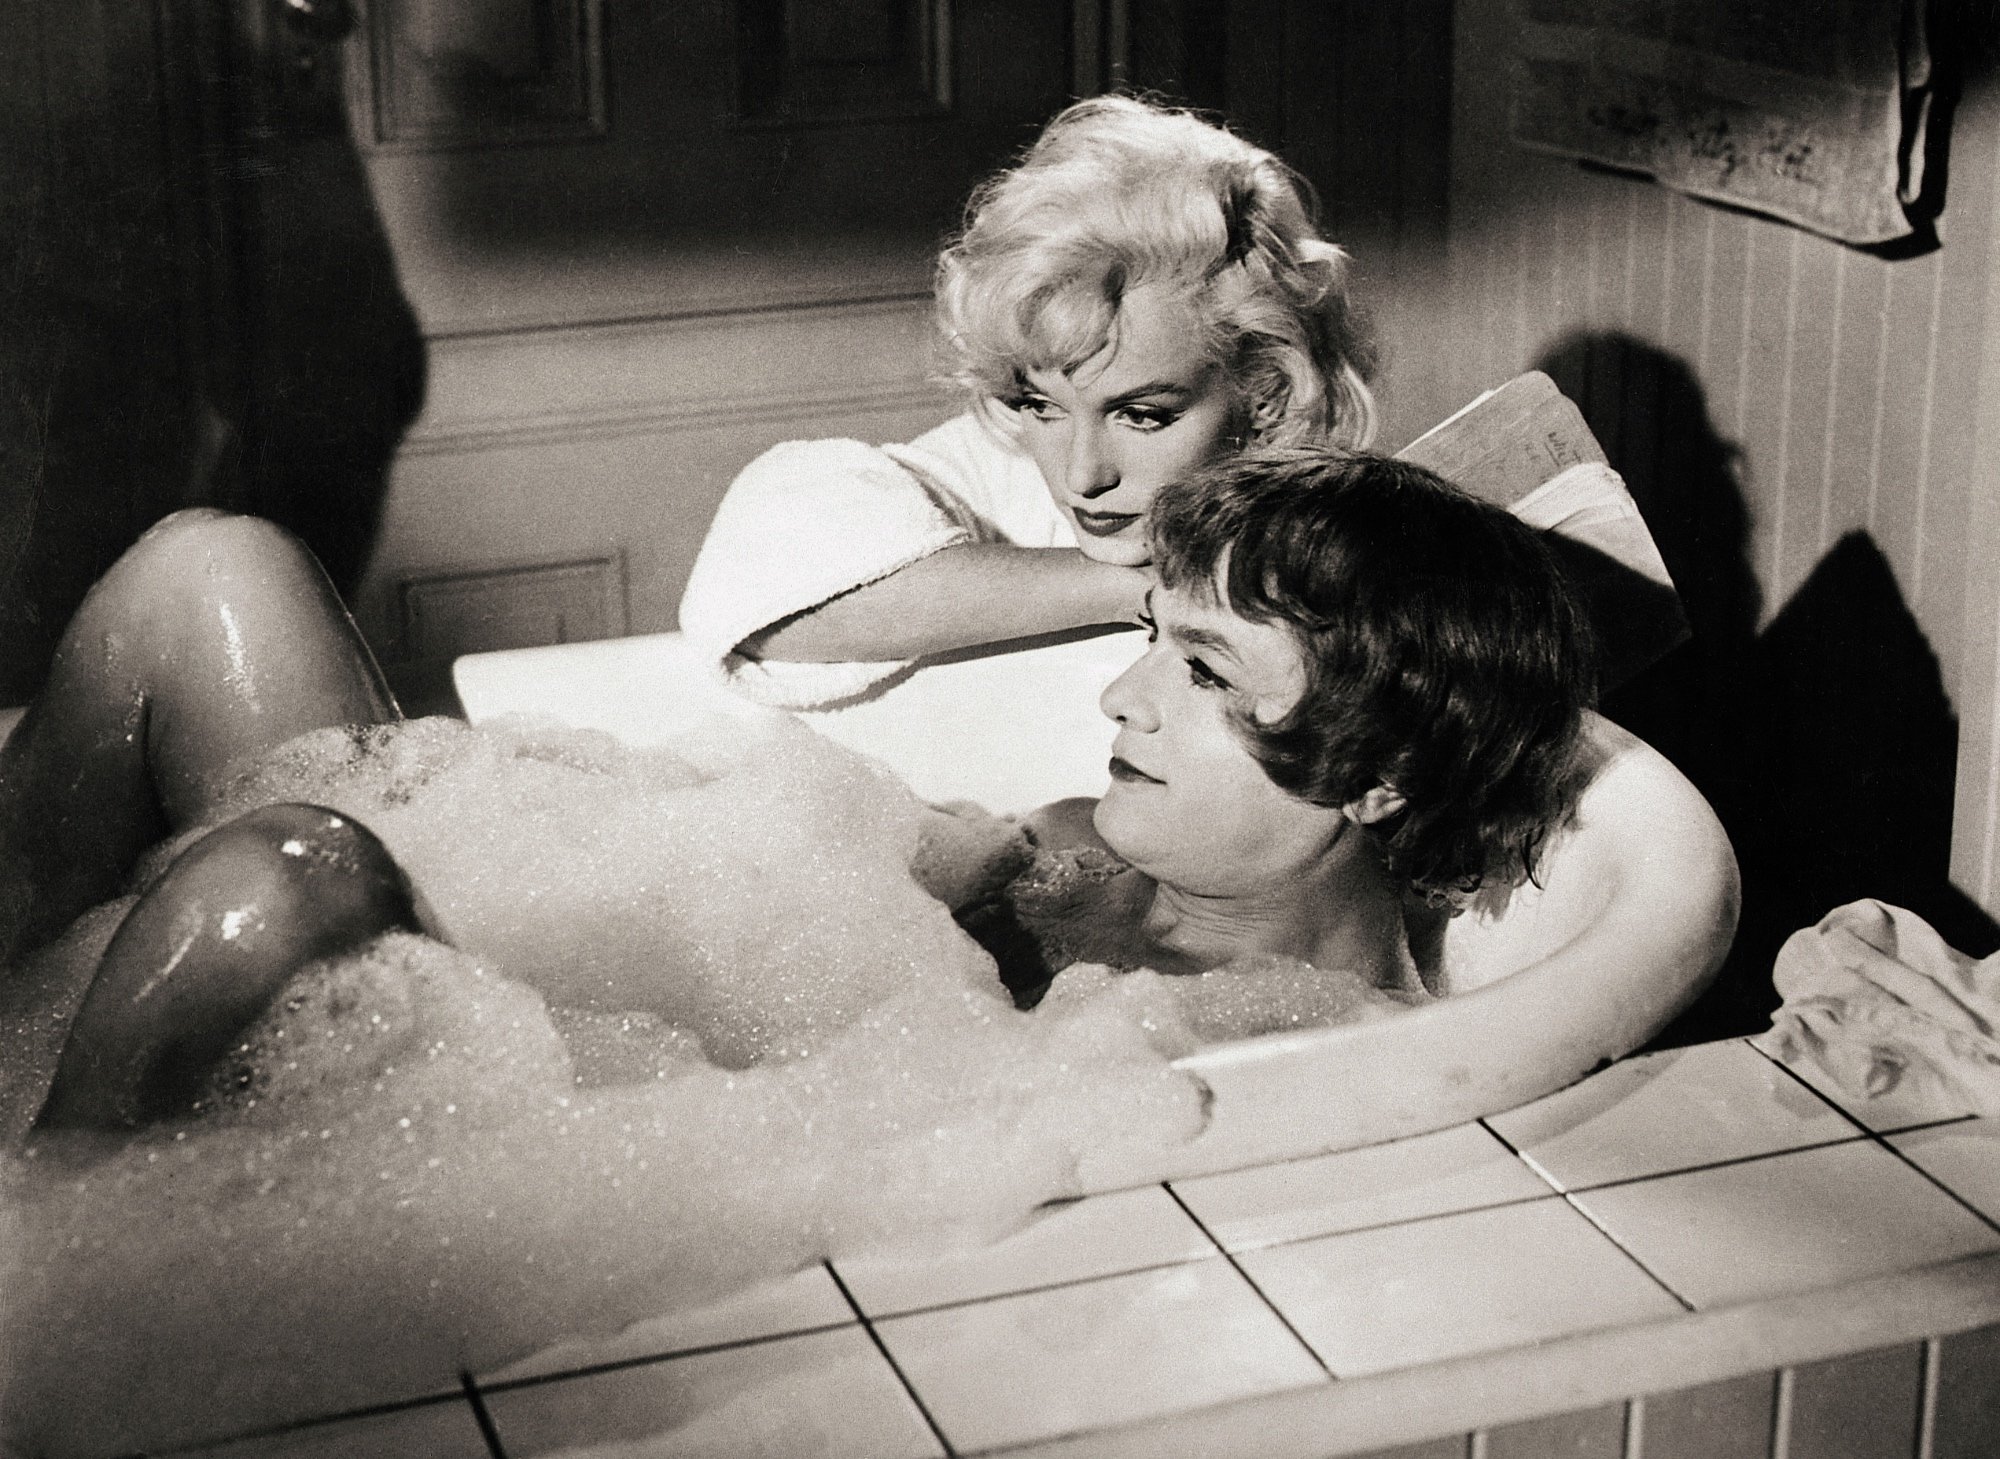 'Some Like It Hot' Marilyn Monroe as Sugar Kane Kowalczyk and Tony Curtis as Joe_Josephine sitting in the bathtub